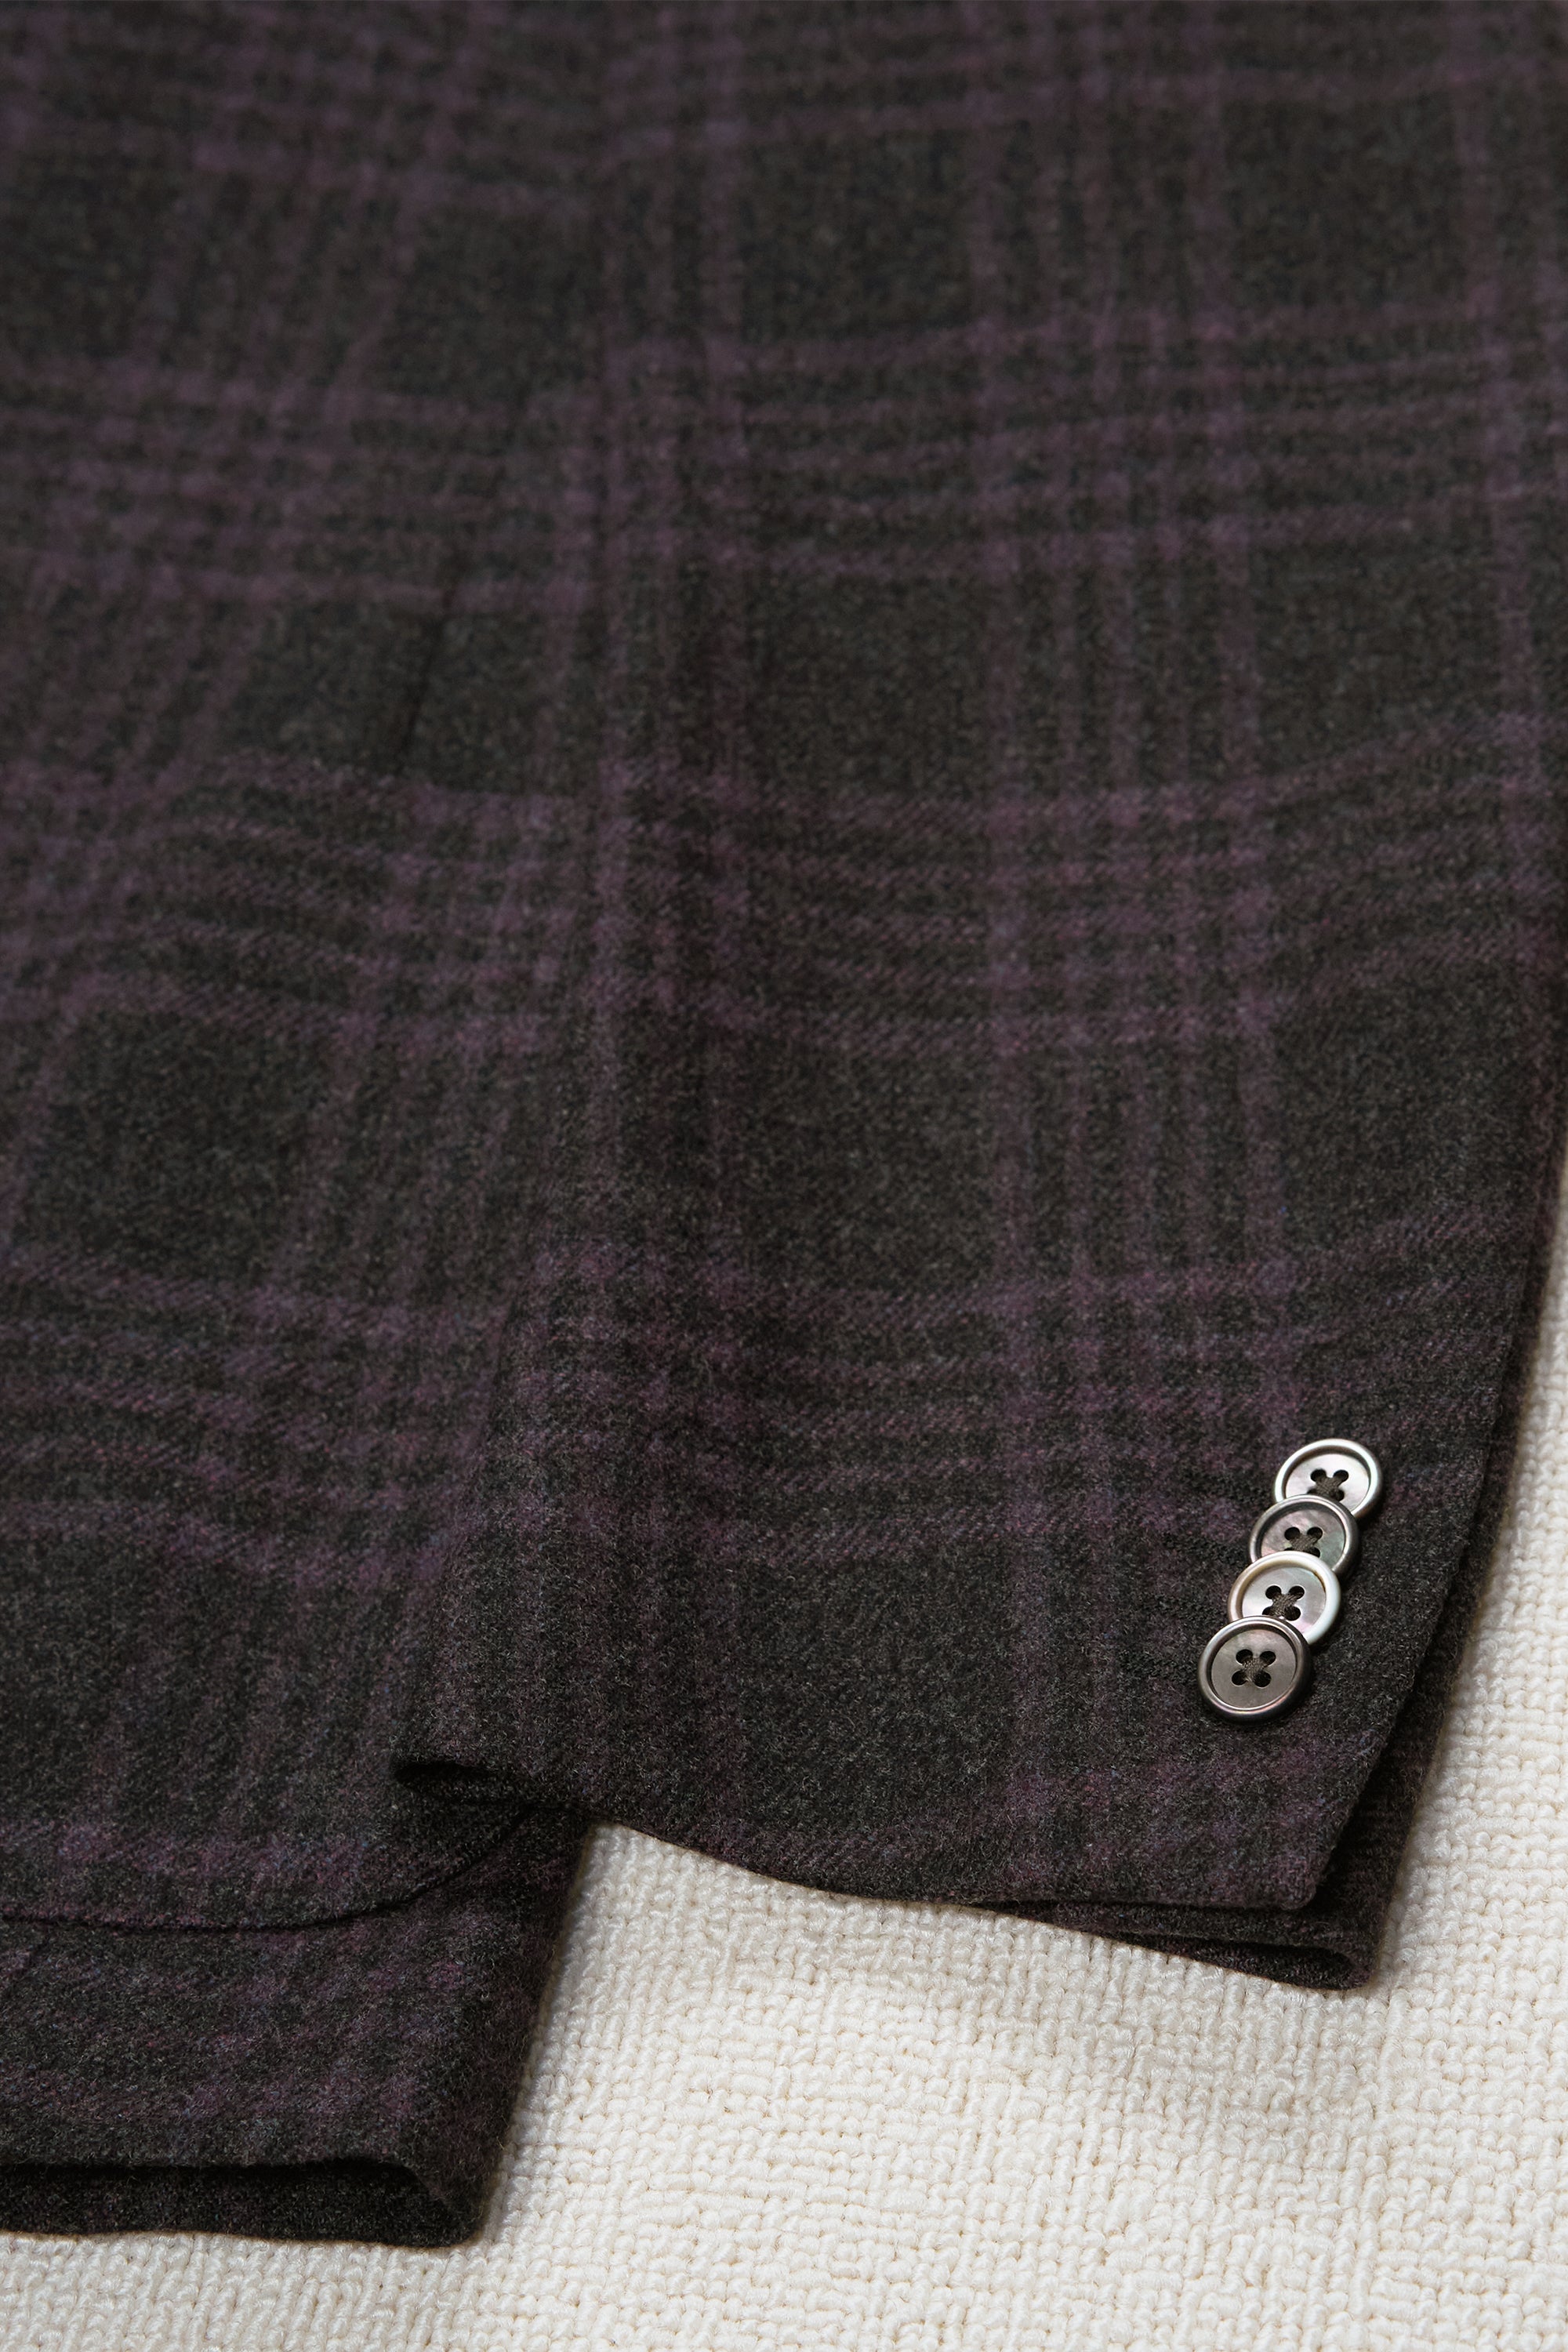 Corneliani Dark Grey with Purple Check Wool/Cashmere Sport Coat